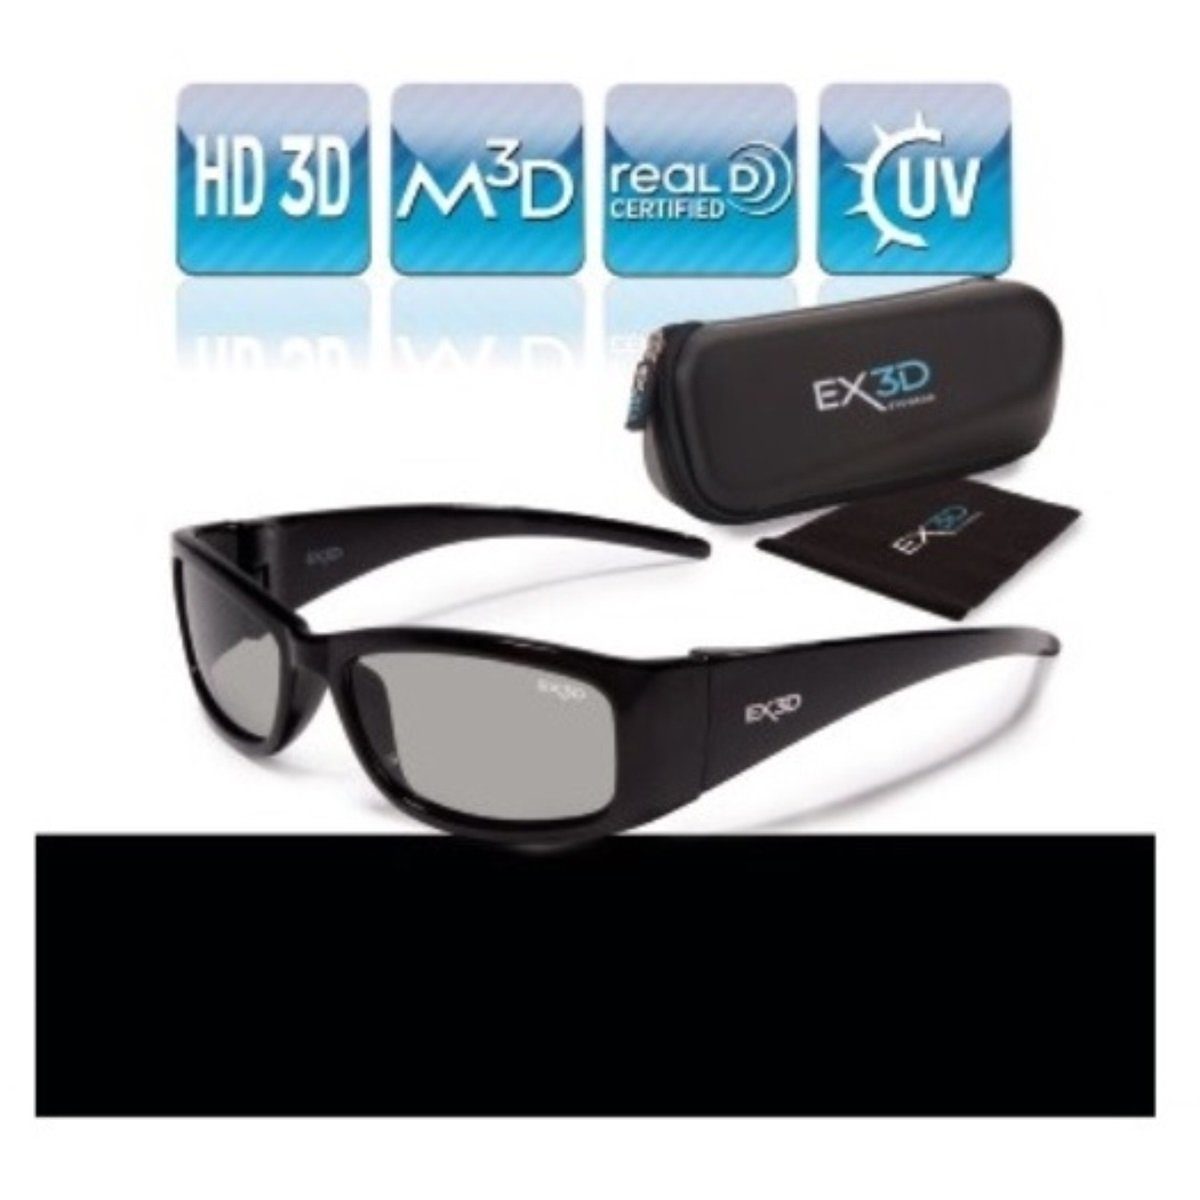 Hama 3D-Brille Kinder 3D Brille Passiv Polfilterbrille Kids Schwarz, Jungen 3D-Technik Passiv Polarisation, Universell für HD 3D-TV etc.